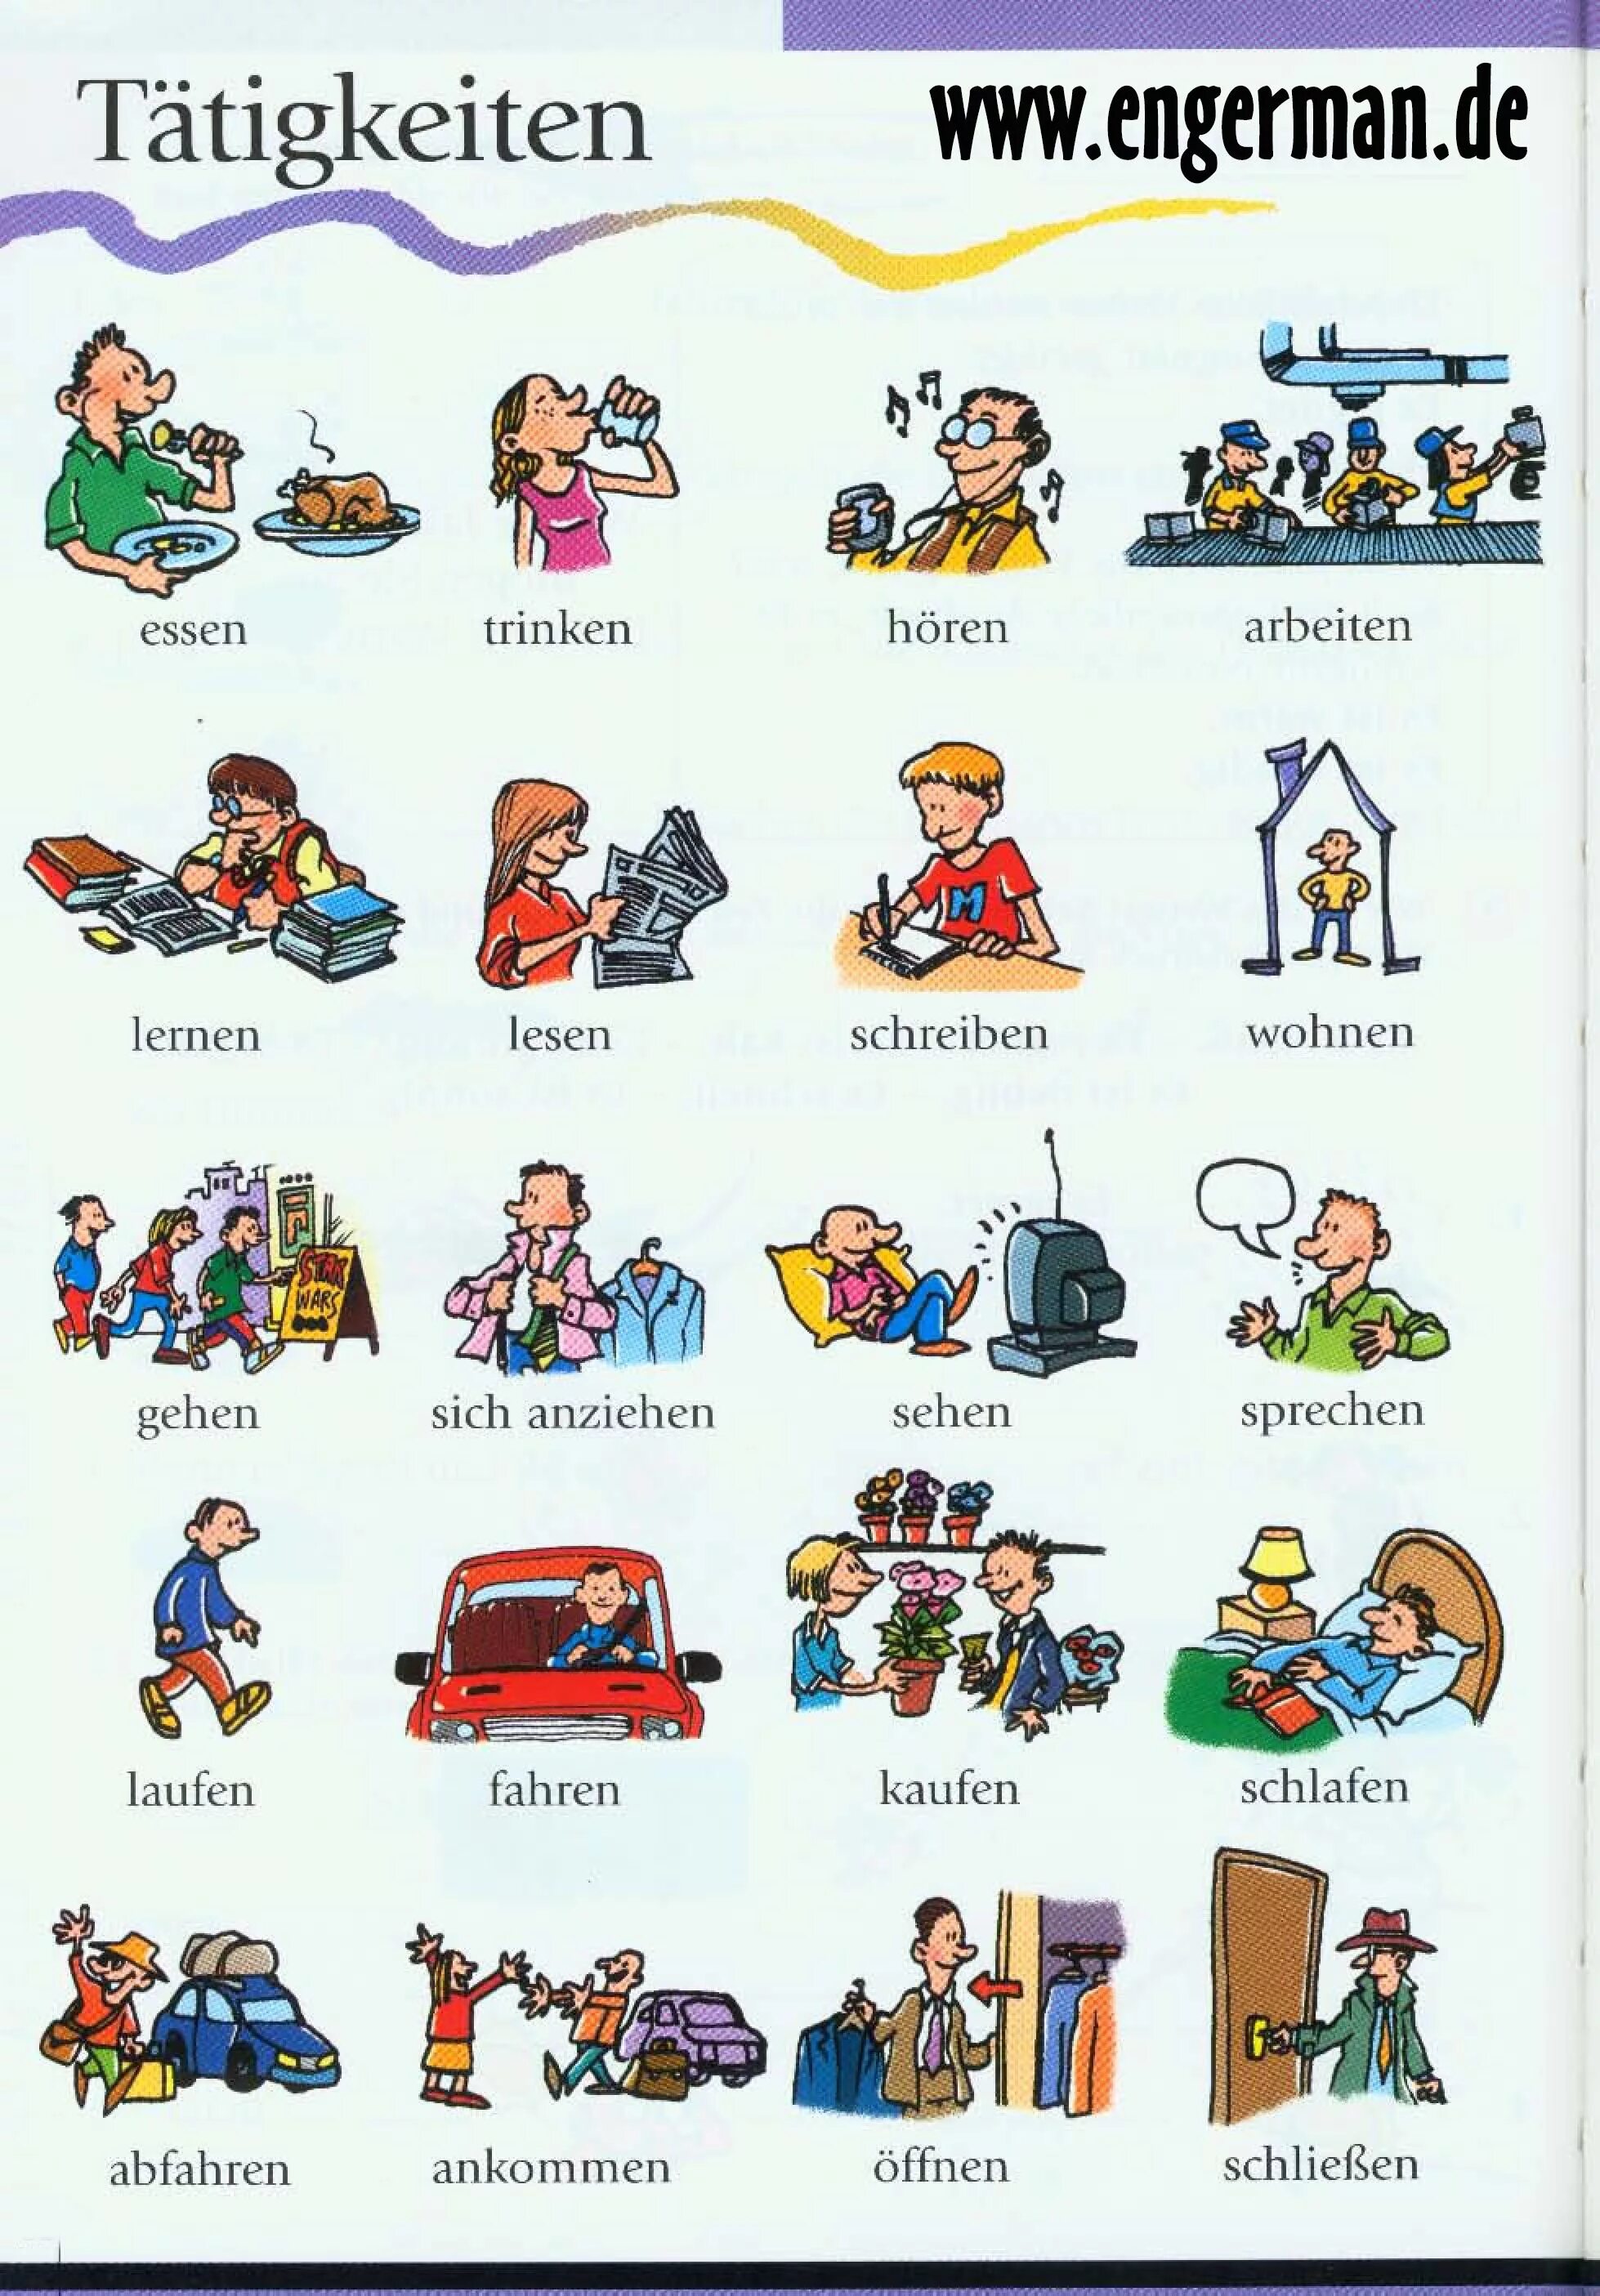 Немецкие глаголы для детей. Немецкие глаголы в карлтнка. Немецкие глаголы в картинках. Глаголы действия на немецком. Именно на немецком